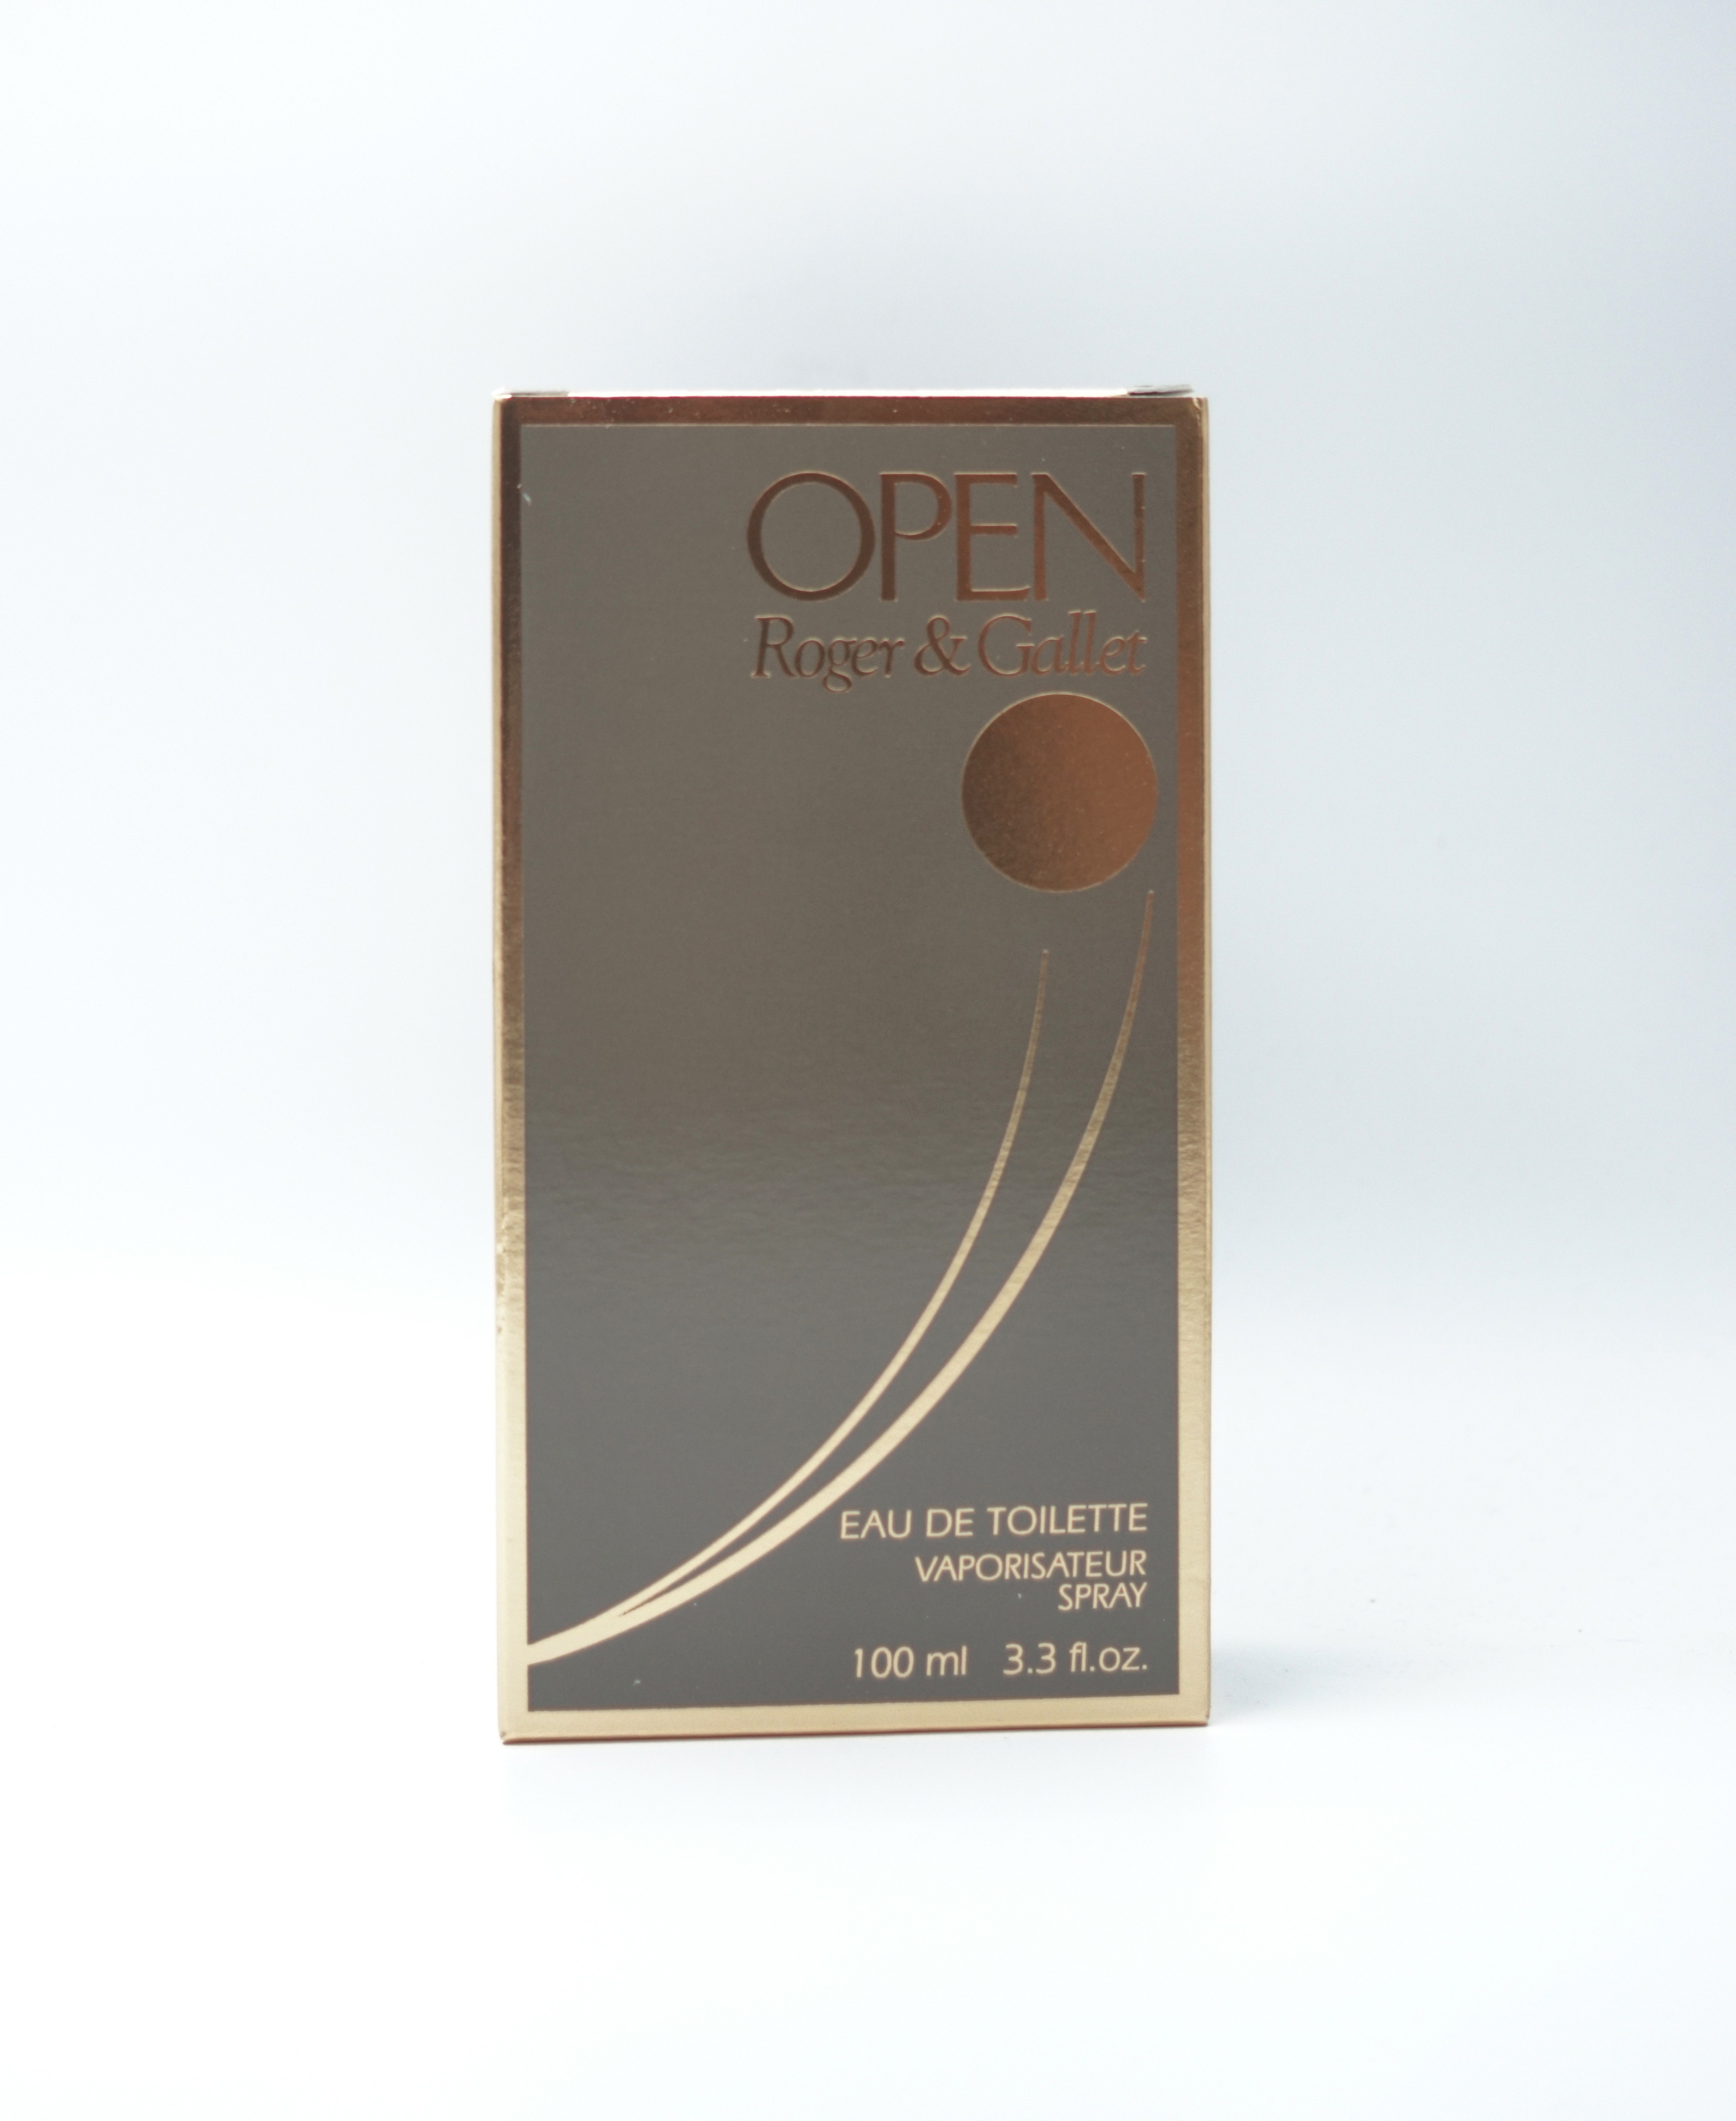 Open Roger And Gallet 100 ml Eau De Toilette Vaporisateur Natural Spray Perfume For Men SKU 96845